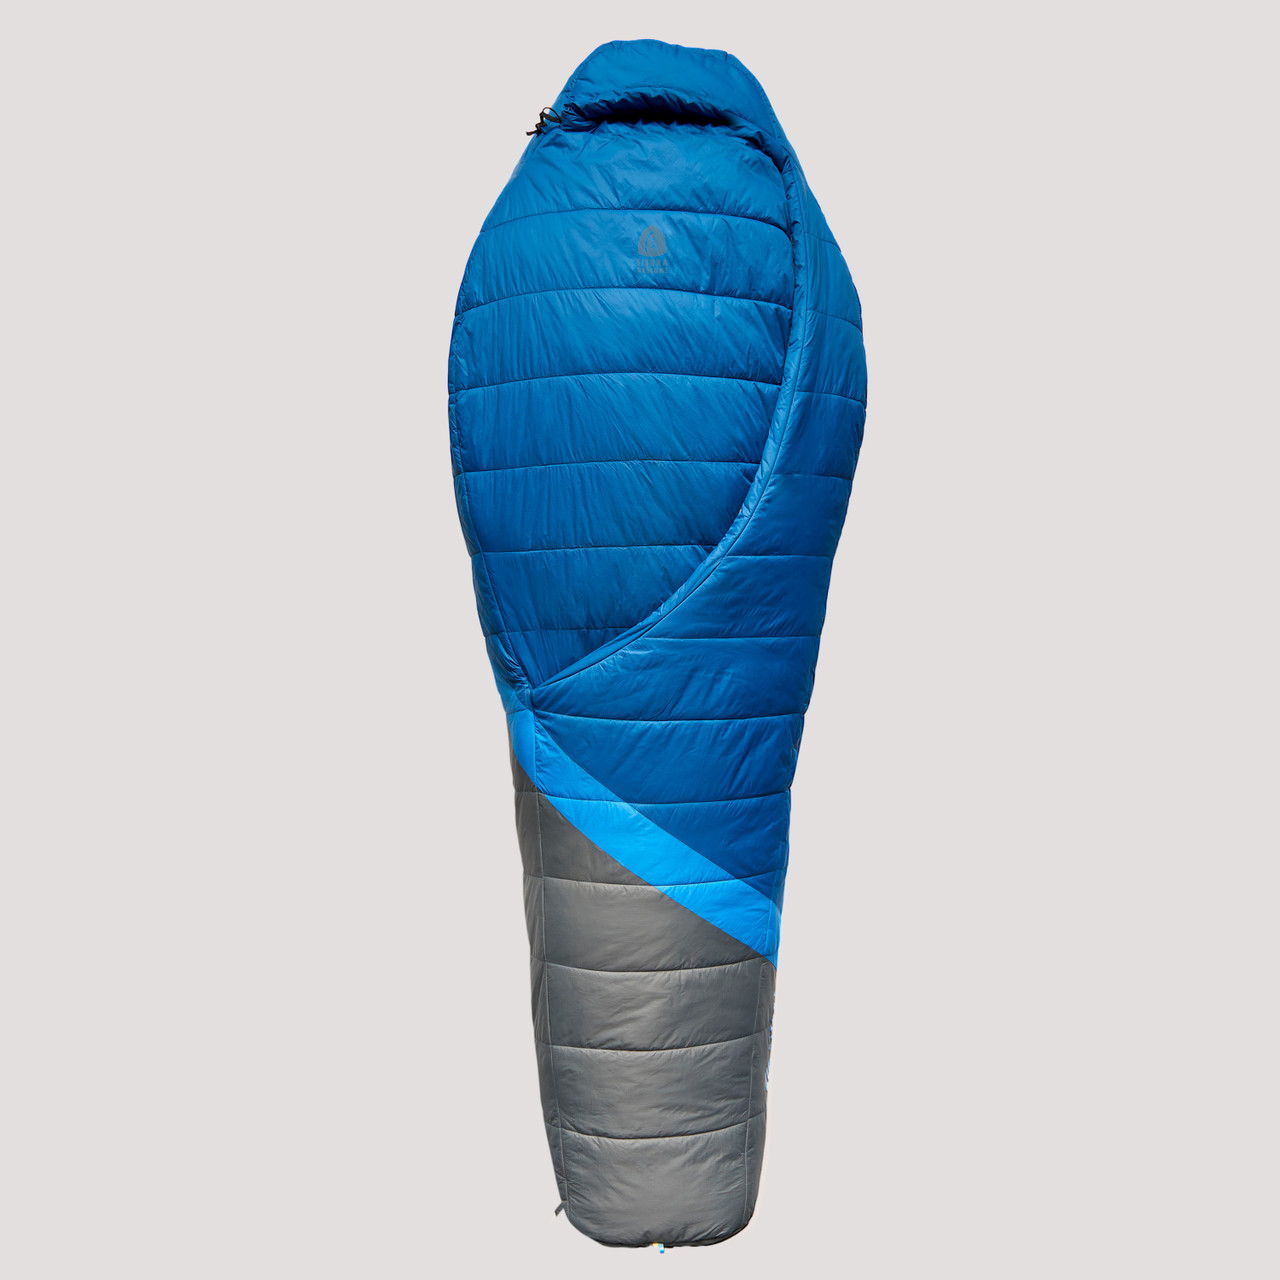 Sierra Designs Night Cap 20 sleeping bag, blue, top view, partially opened